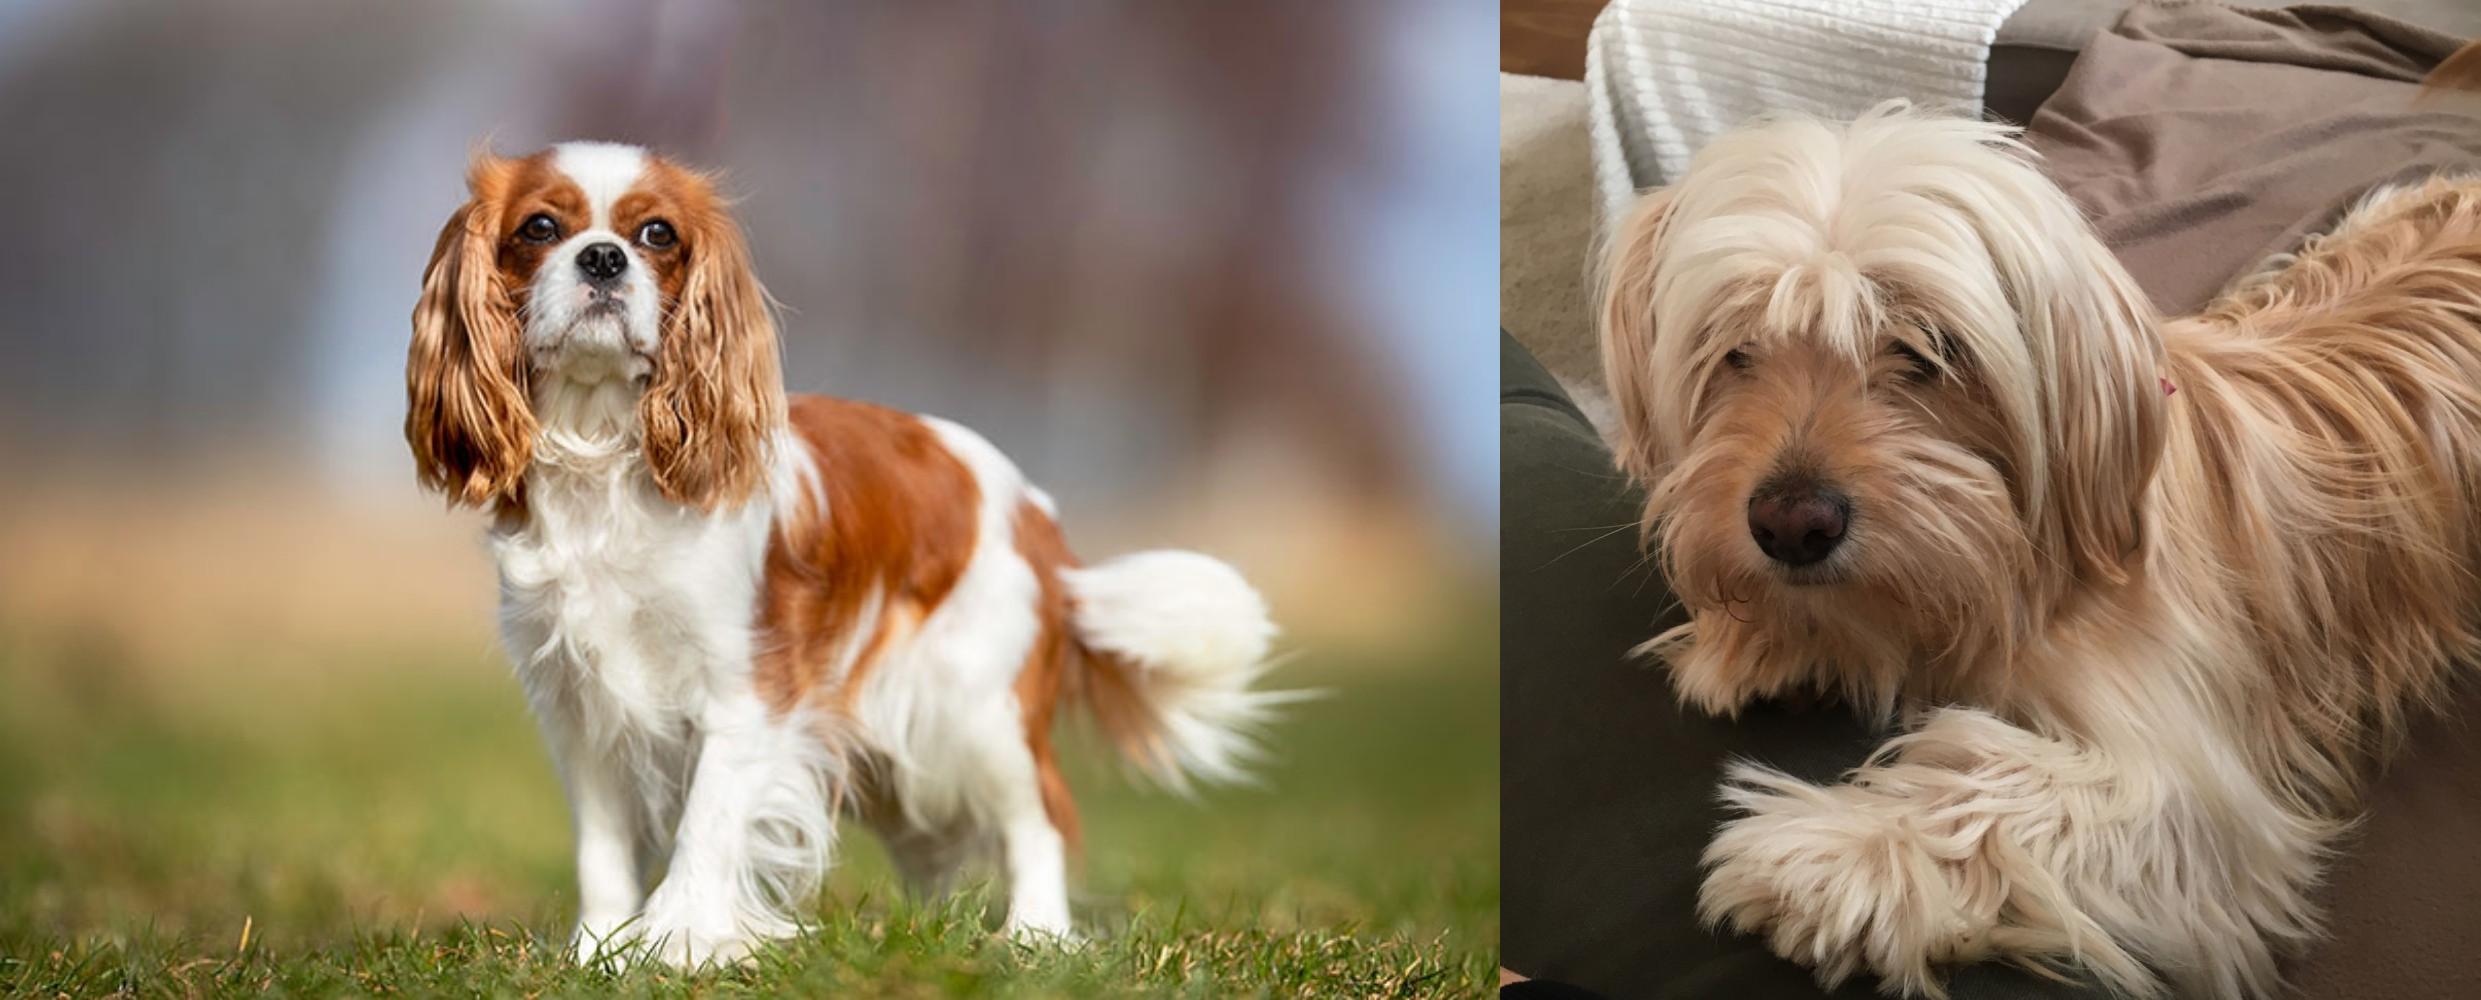 King Charles Spaniel Vs Cyprus Poodle Breed Comparison